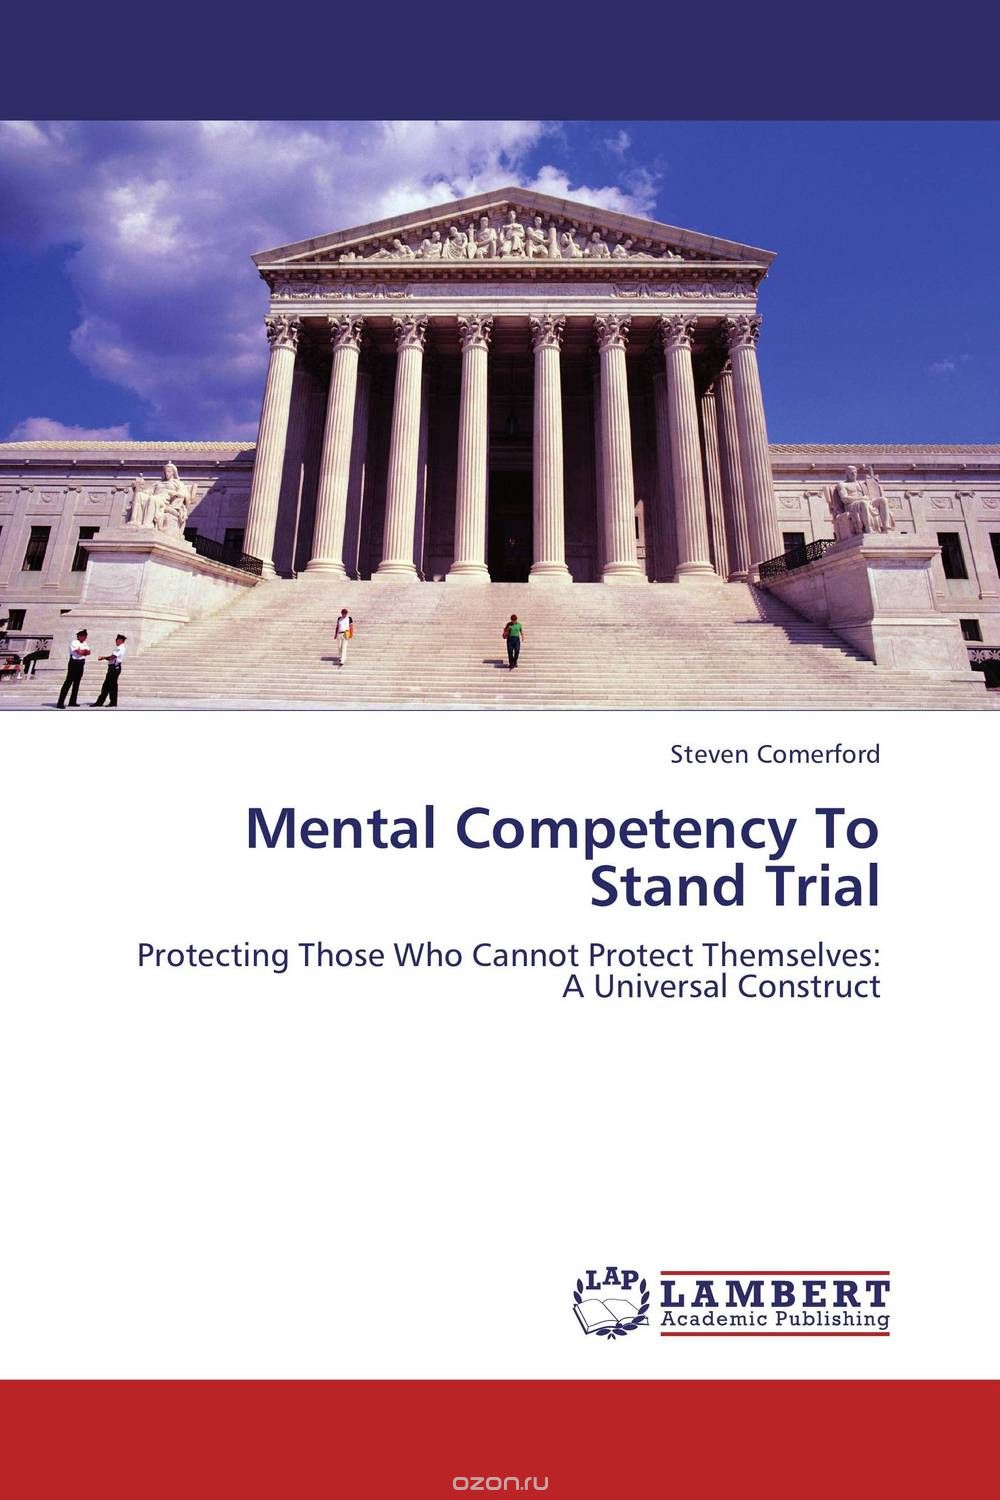 Скачать книгу "Mental Competency To Stand Trial"